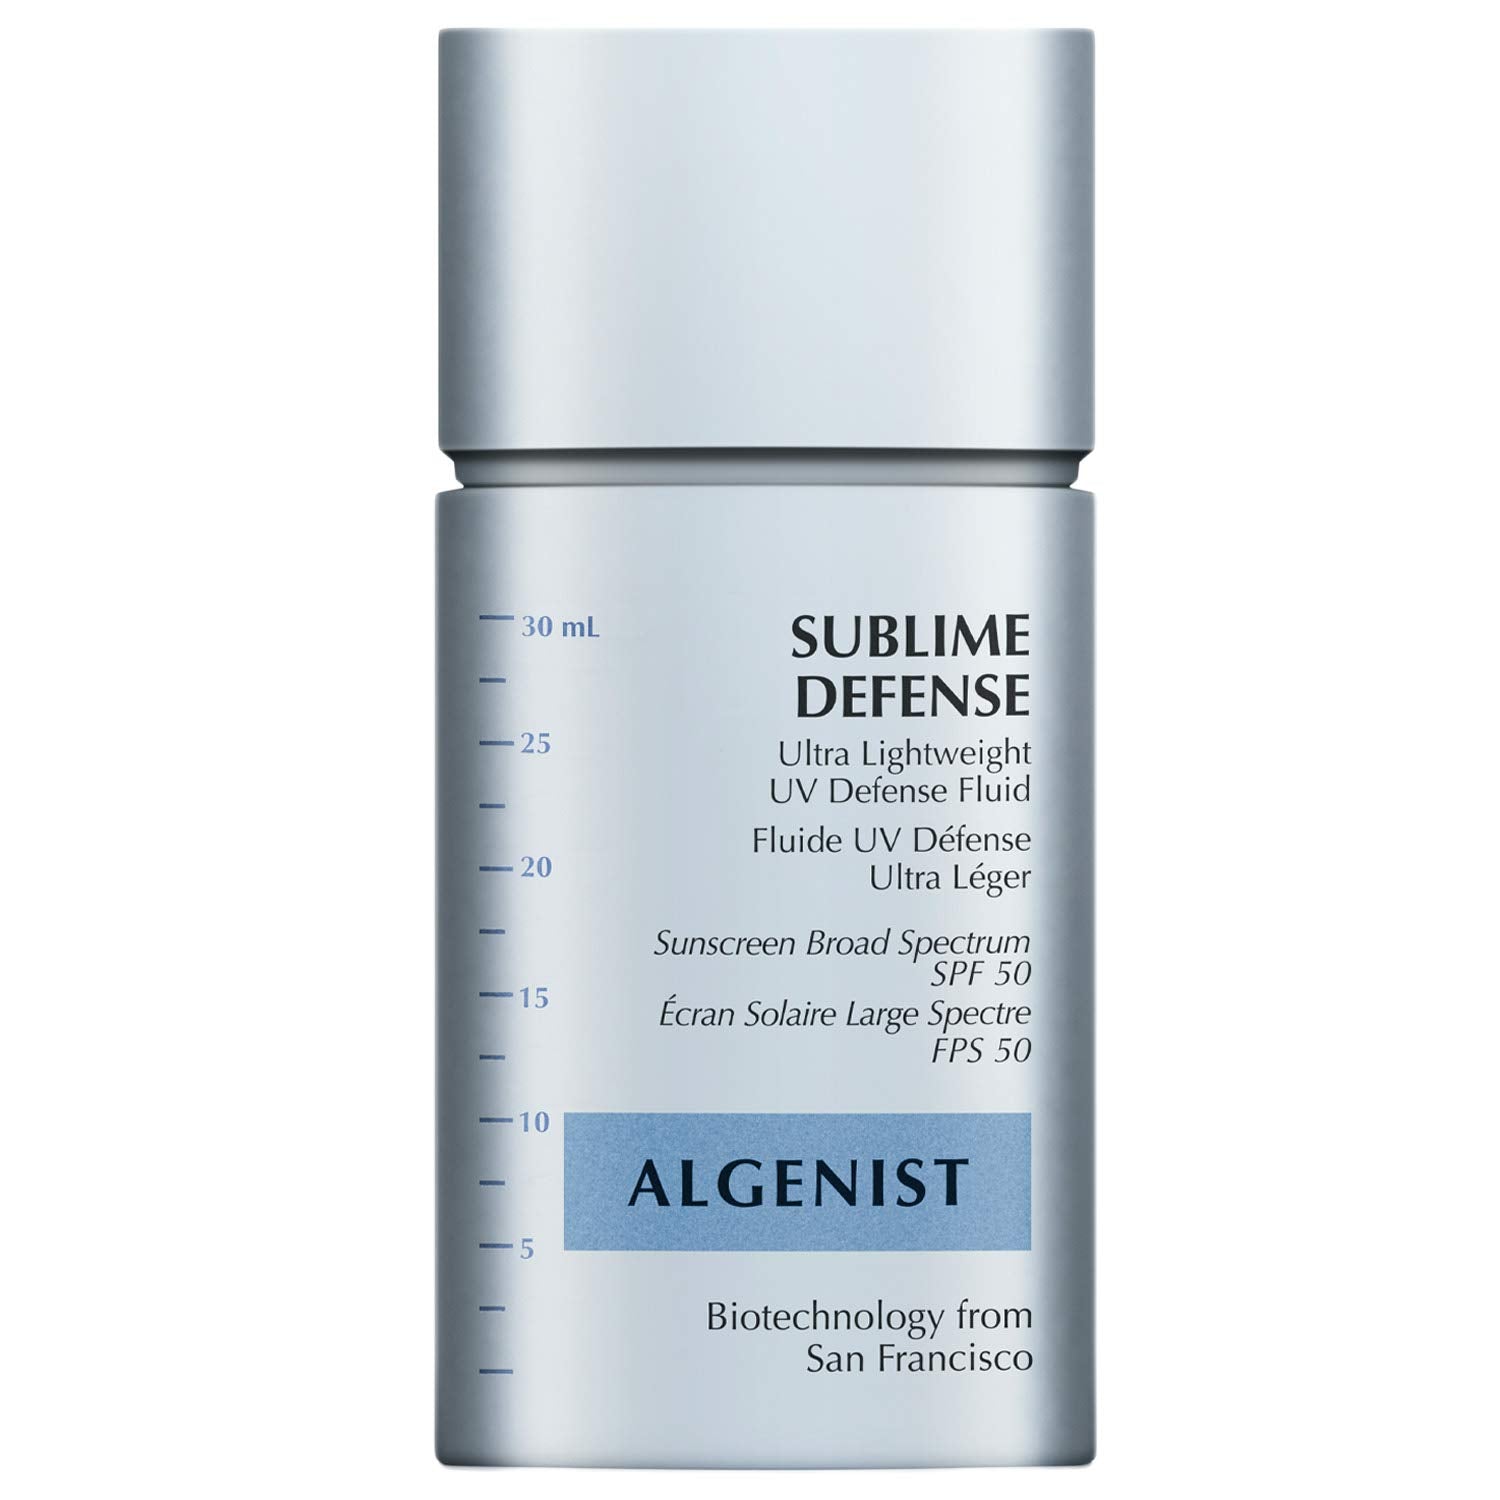 Algenist Sublime Defense Ultra Lightweight UV Defense uid SPF50 - Sheer, Oil-Free Face Sunscreen with Vitamin E, Echinacea & Green Tea - Non-Comedogenic & Hypoallergenic Skincare (30ml / 1)